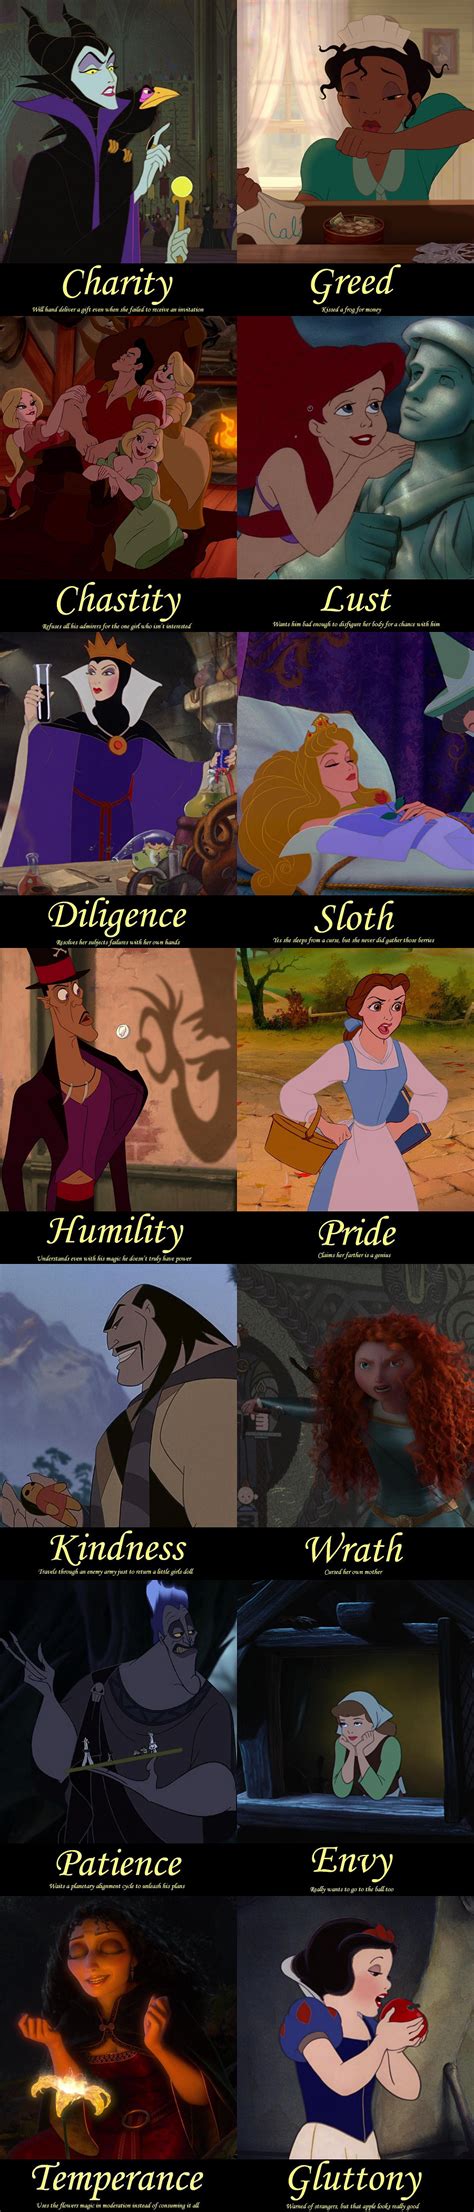 Disney Villain Virtues And Princess Sins By Stachan On